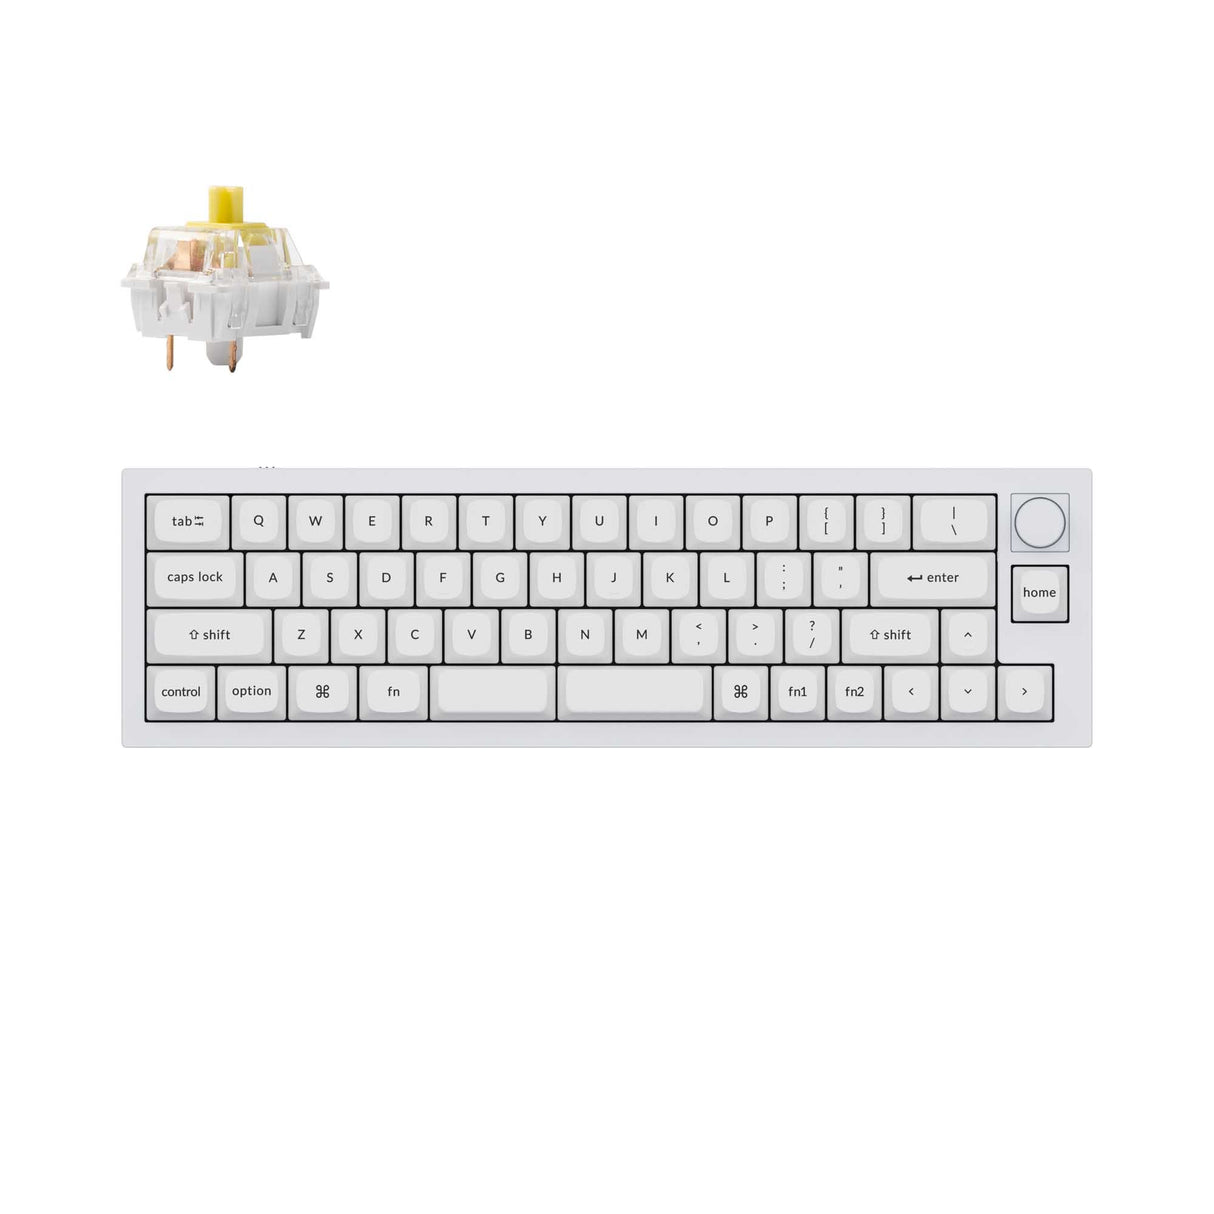 Keychron Q9 Plus QMK/VIA custom mechanical keyboard knob version 40 percent layout full aluminum body for Mac Windows Linux fully assembled white frame with banana switch